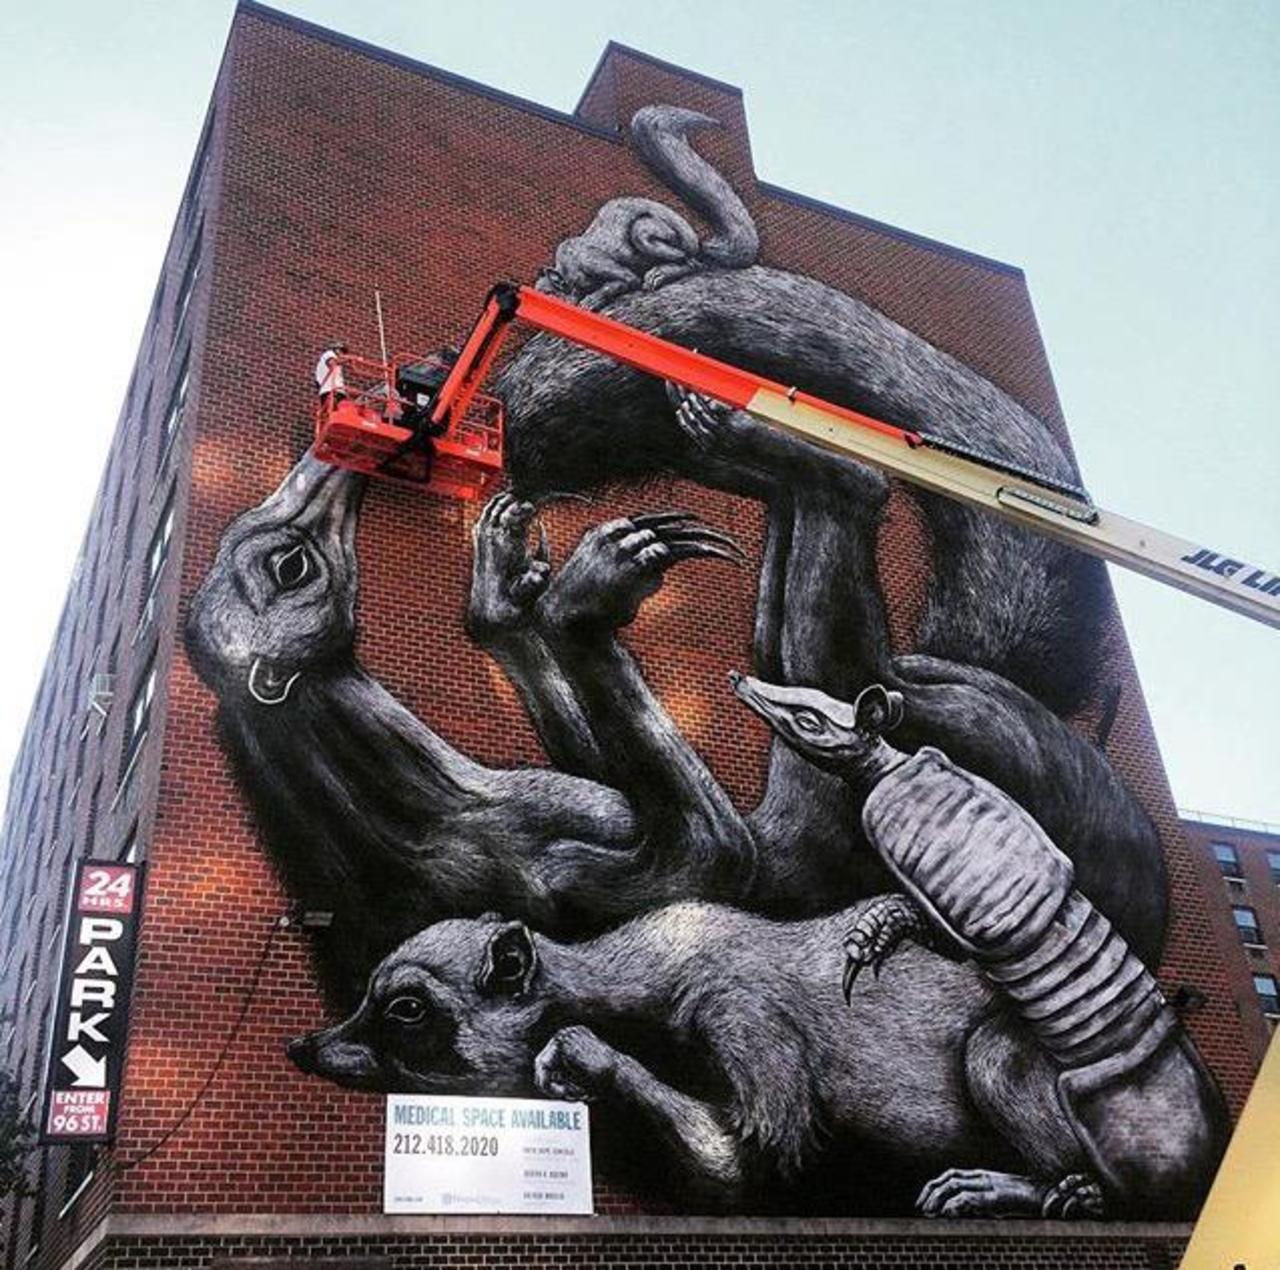 Street Art in progress by ROA in NYC

#art #graffiti #mural #streetart http://t.co/1CbddjAvT6